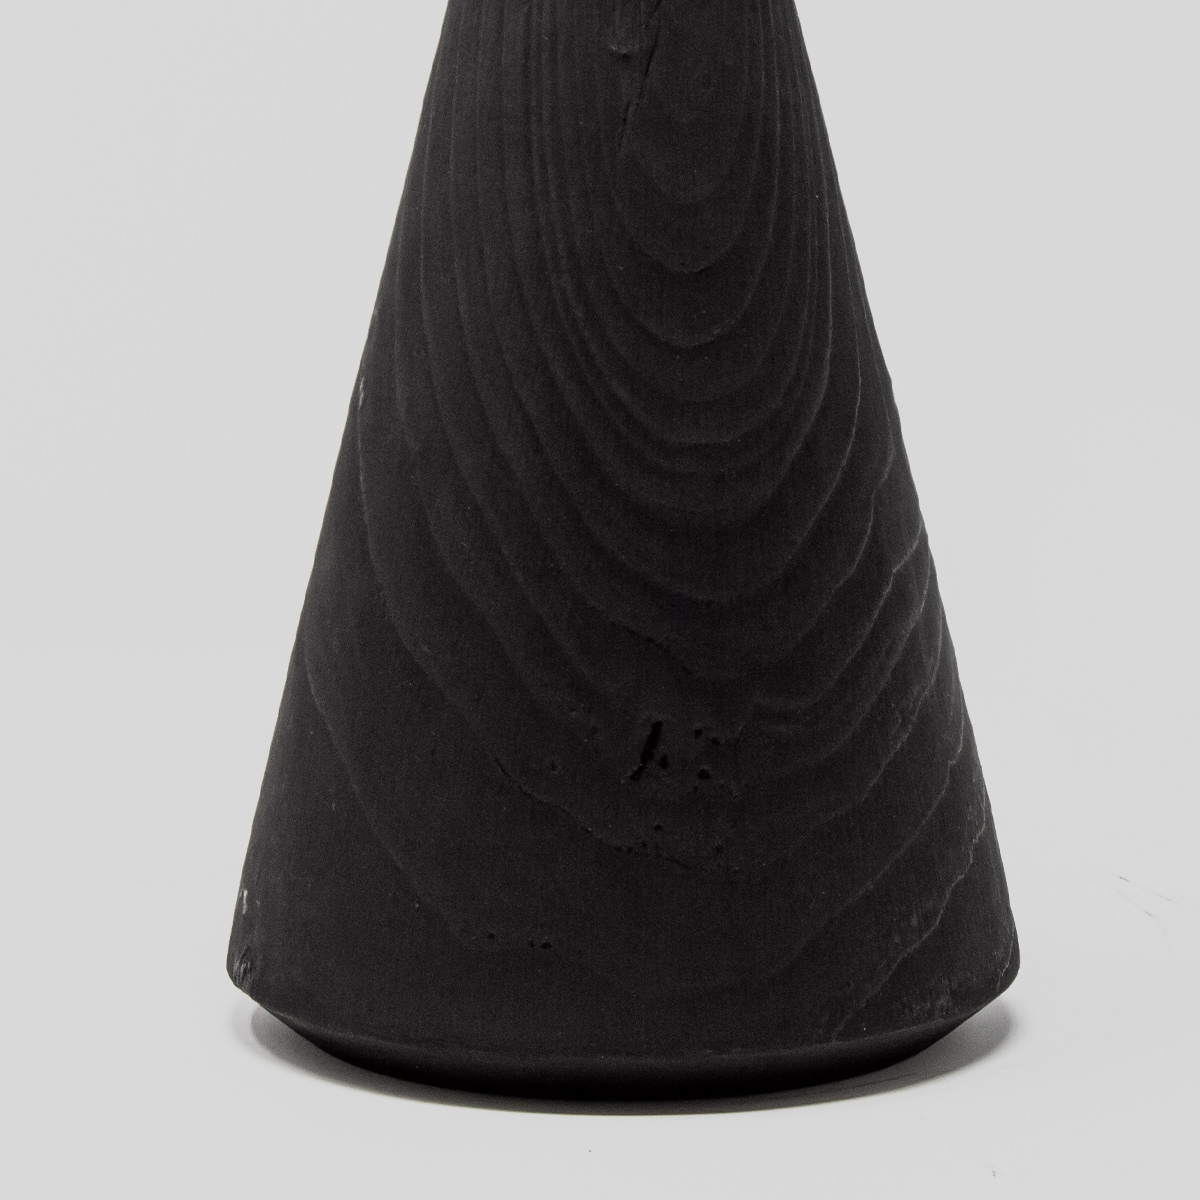 Vaso in legno Vulcani S by Hands on Design